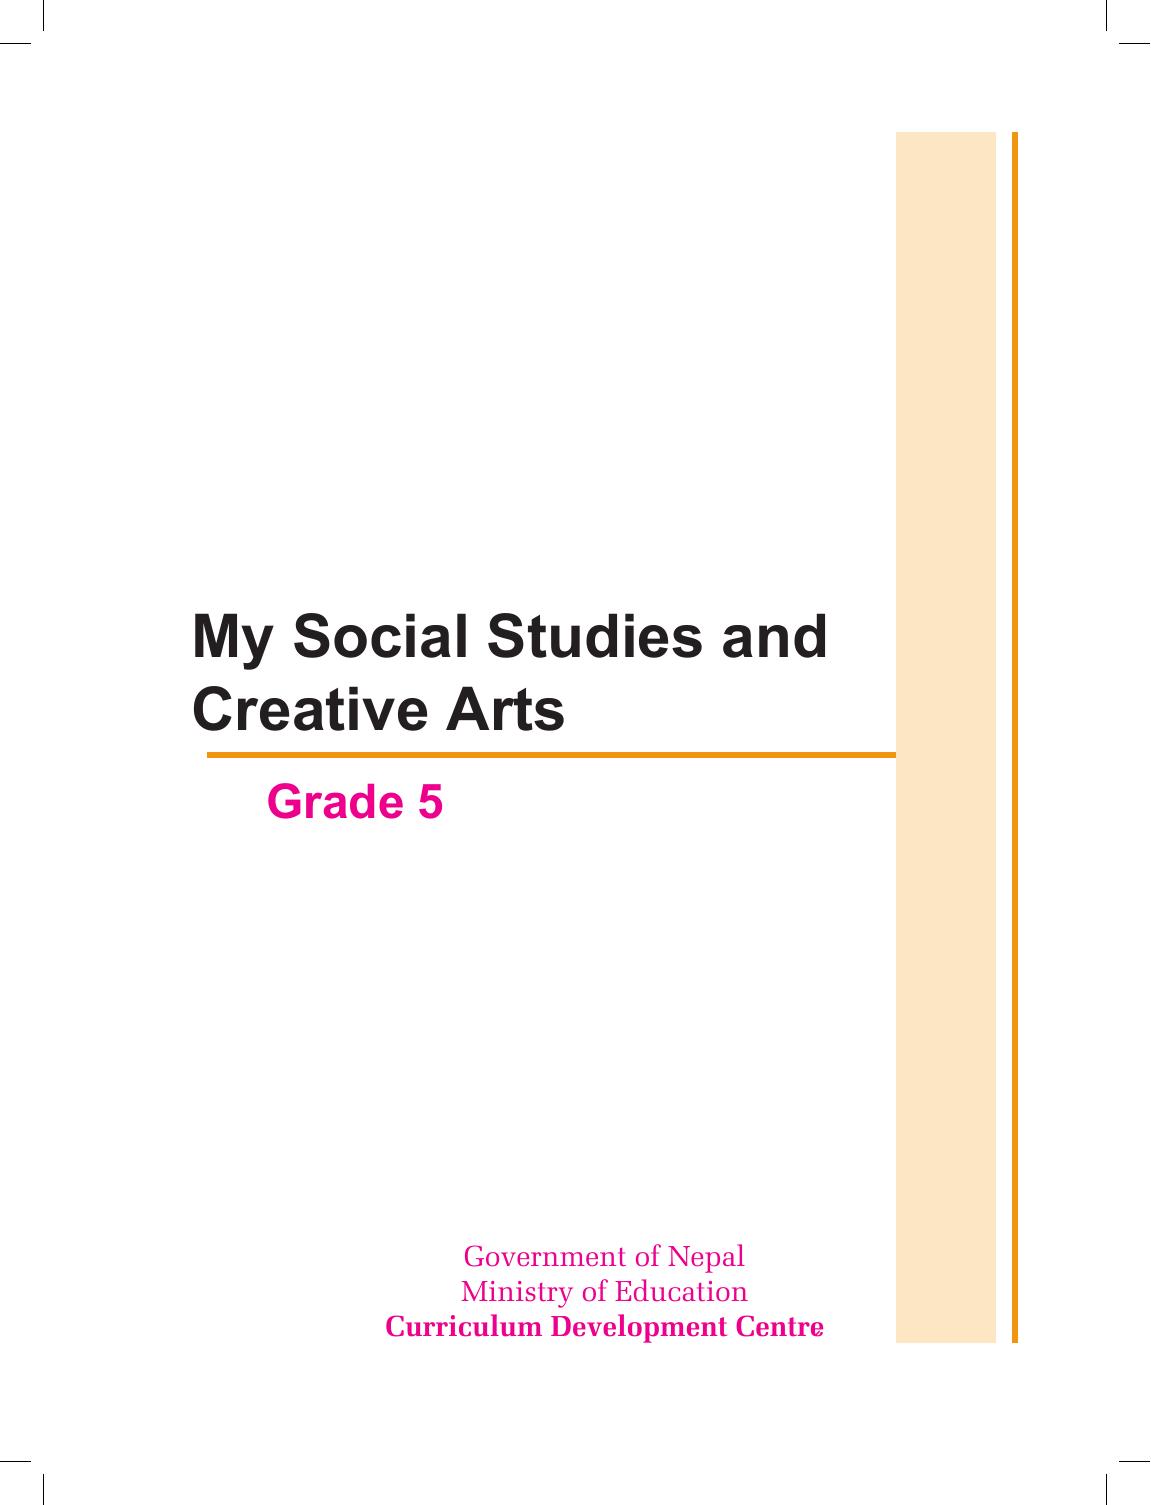 CDC 2017 - My Social Studies and Creative Arts Grade 5